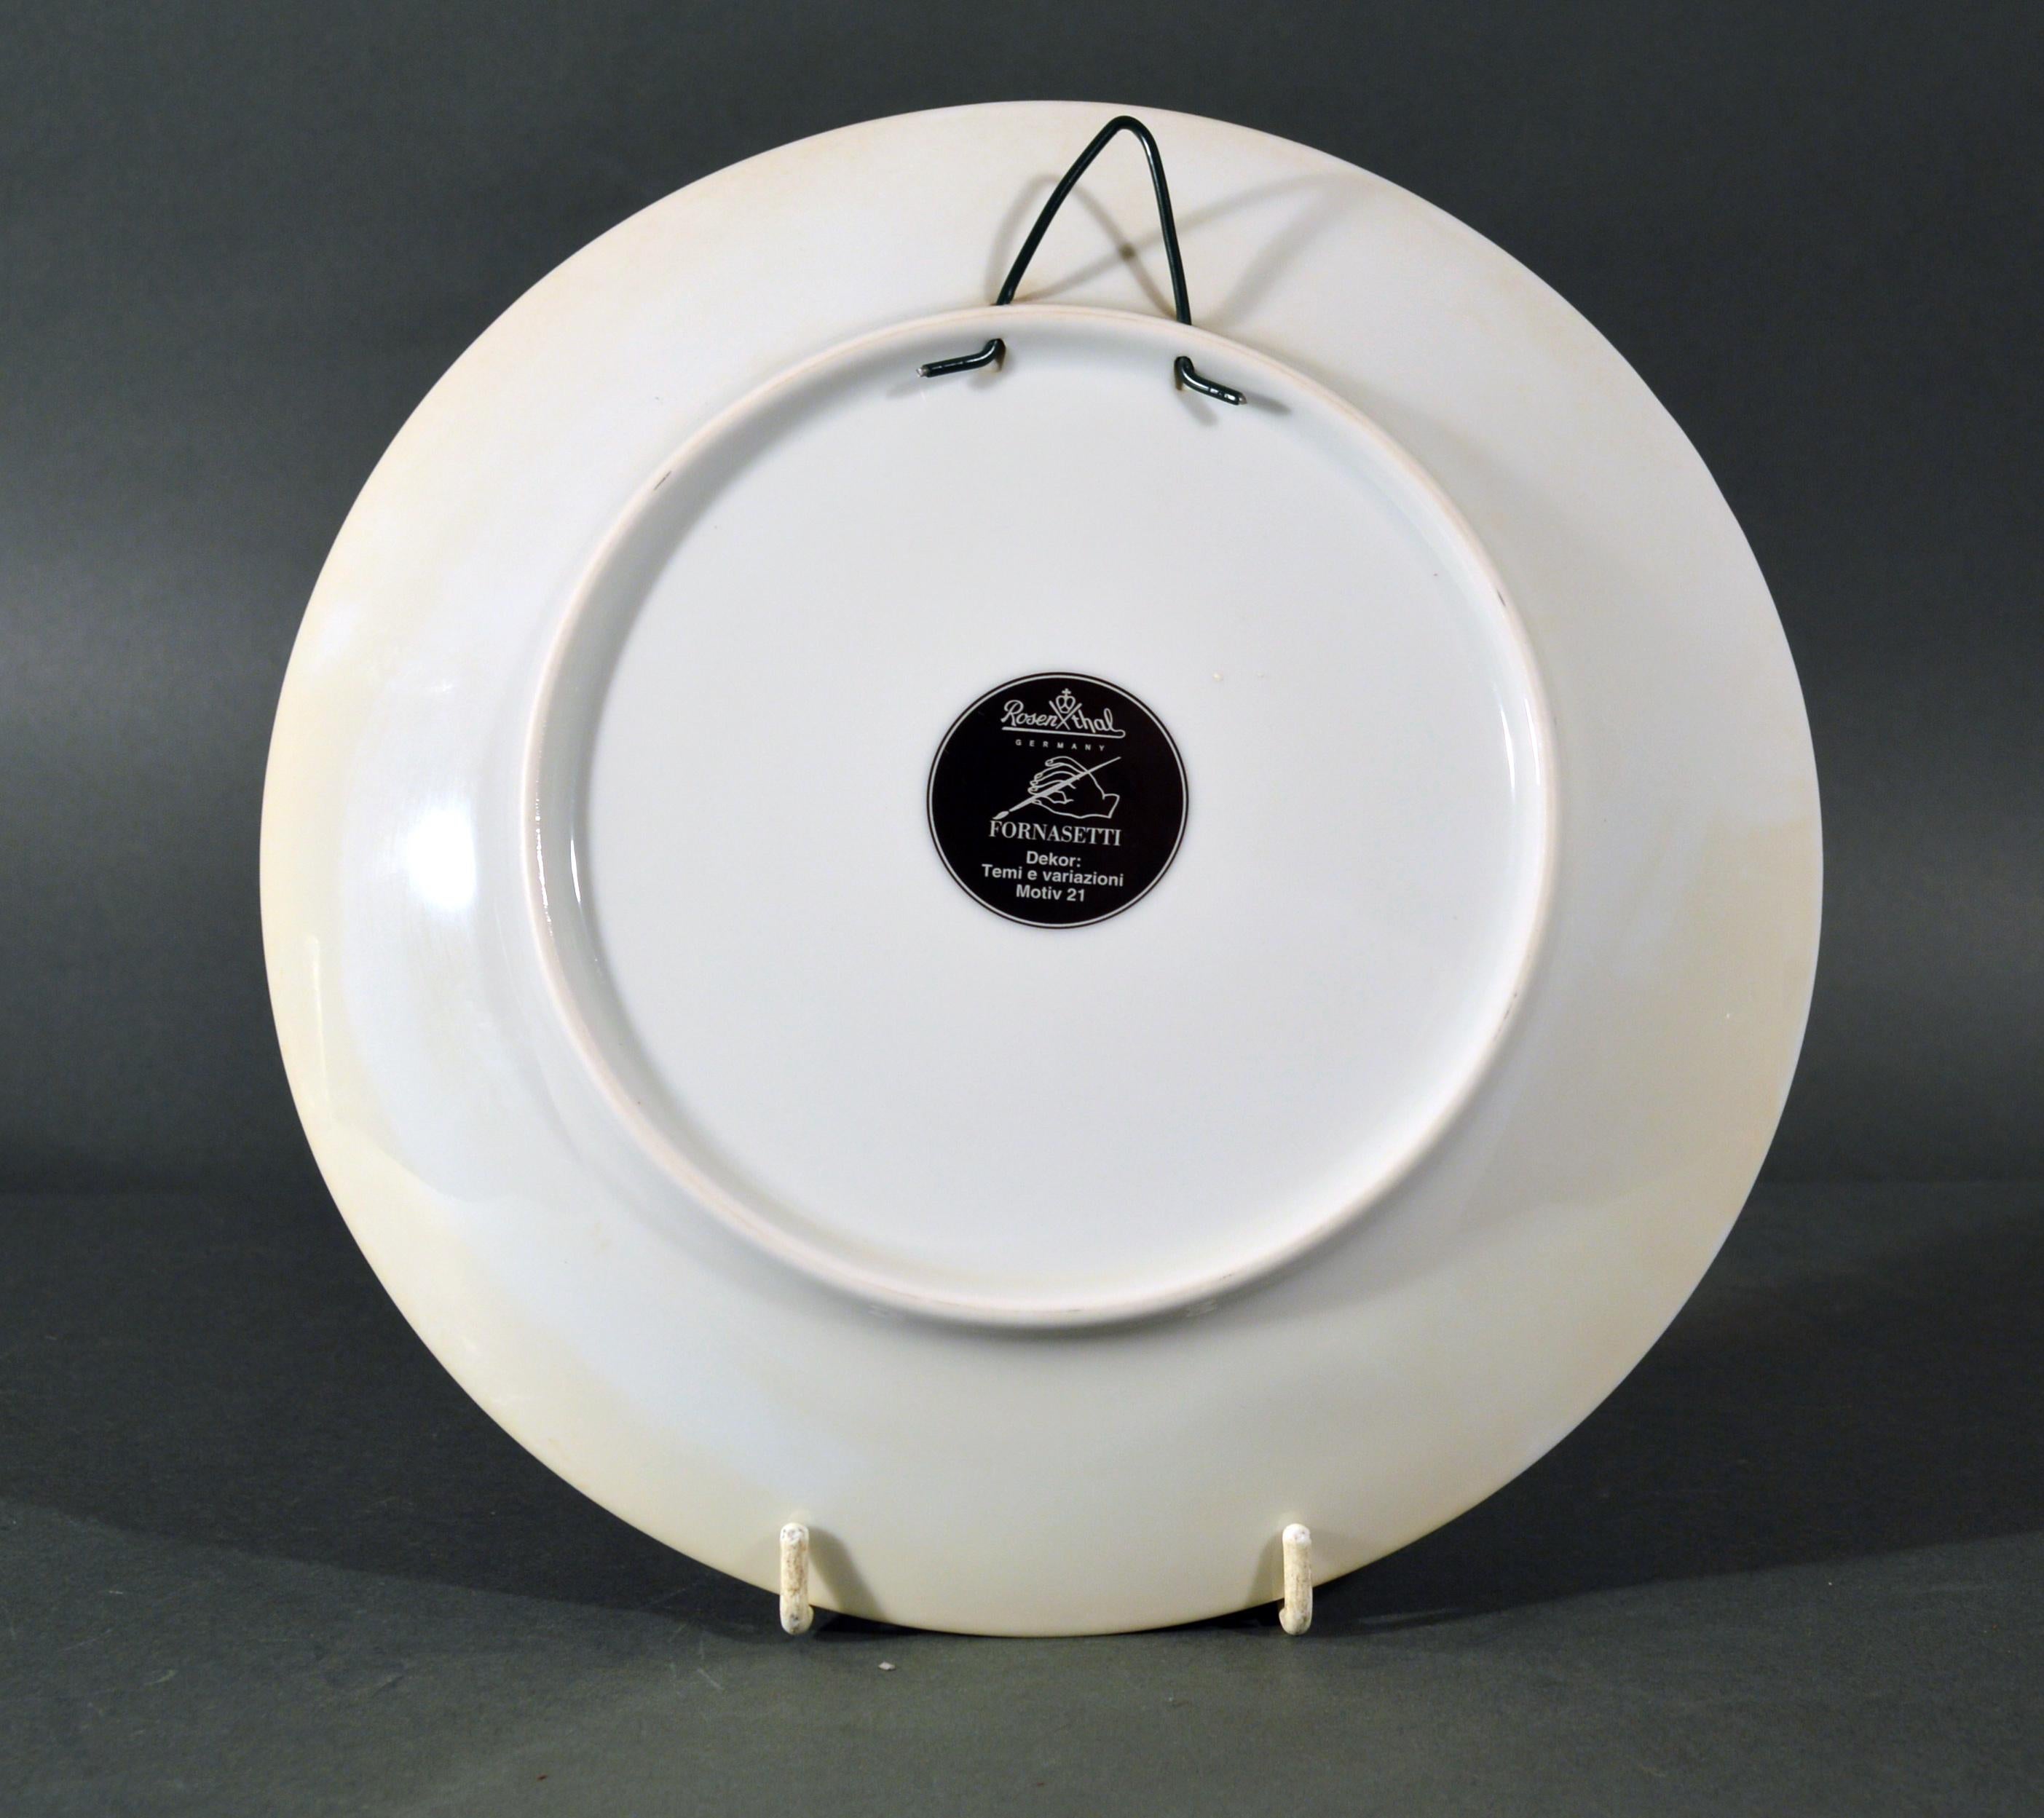 Mid-Century Modern Rosenthal Piero Fornasetti Themes and Variation Porcelain Plate Motiv 21